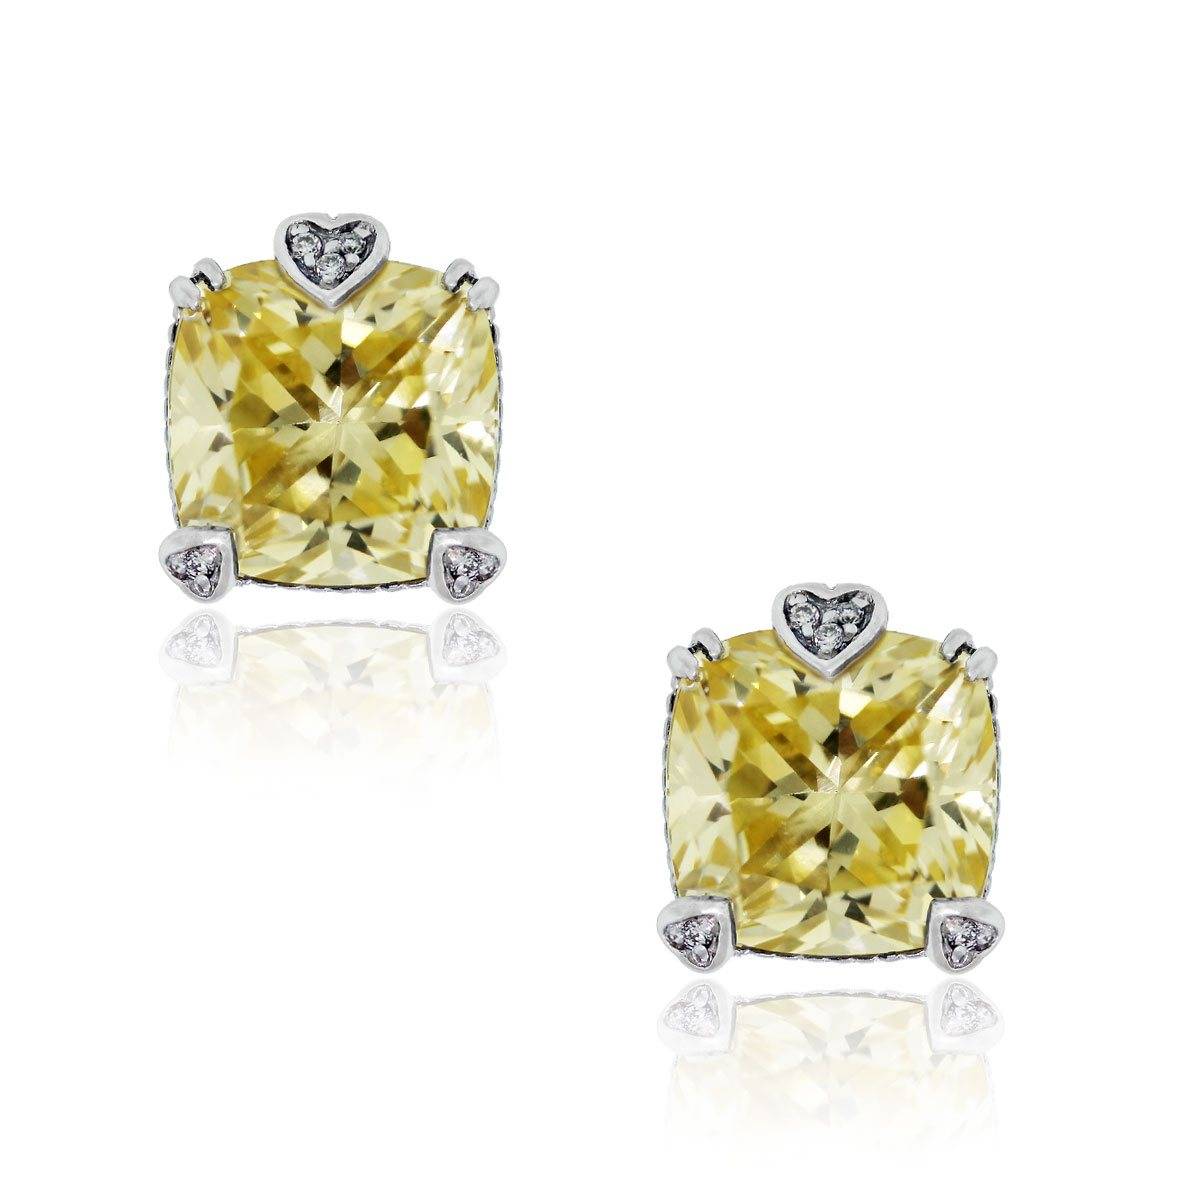 Judith Ripka Canary Crystal earrings